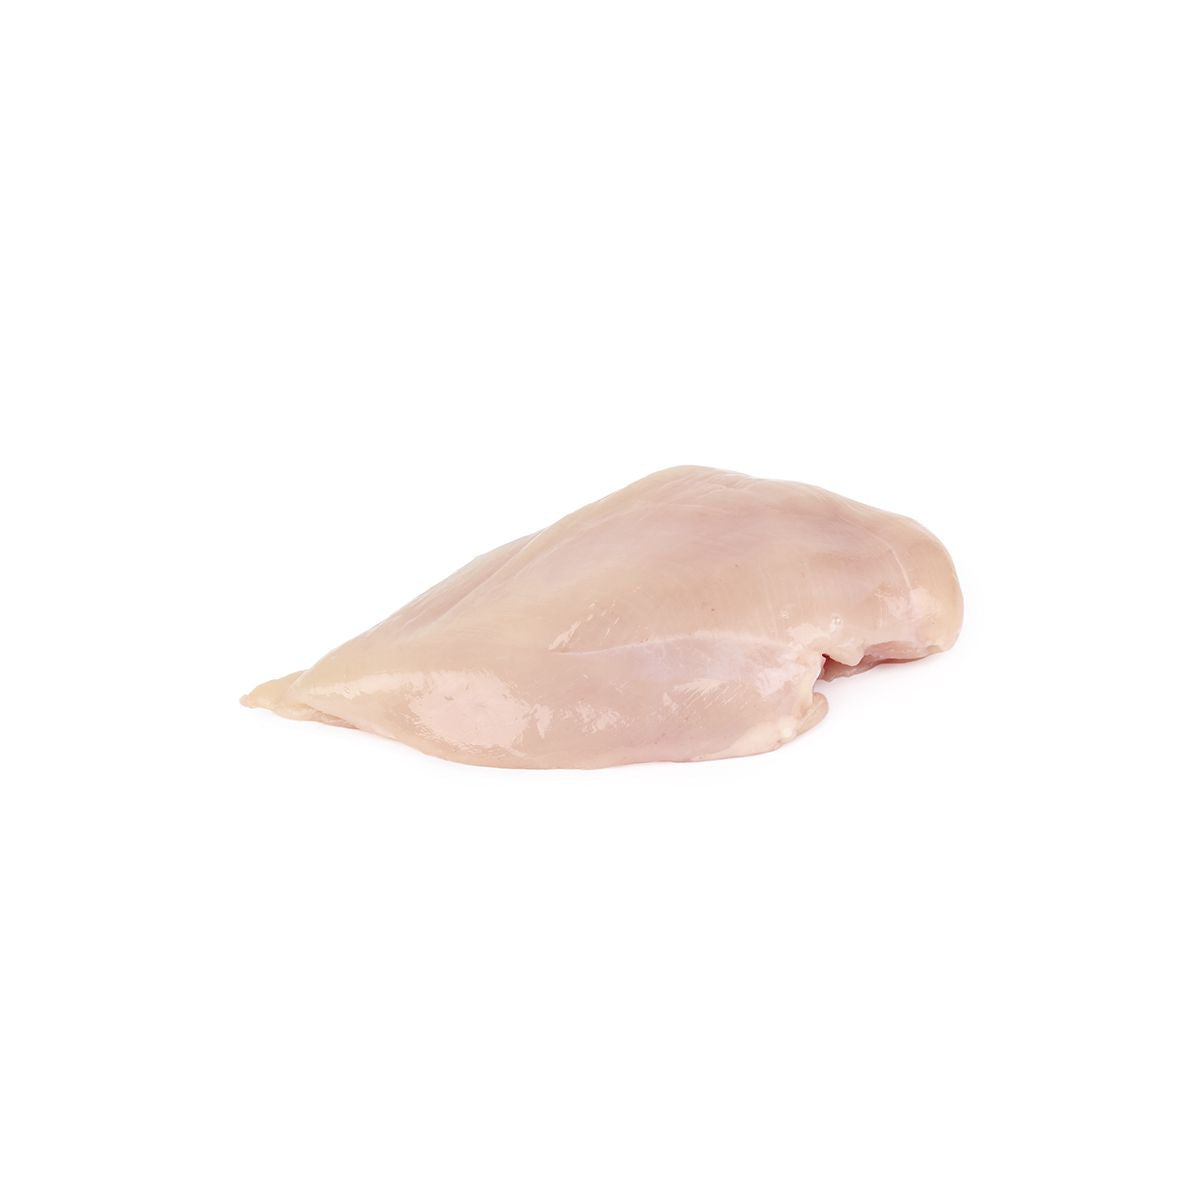 Harvestland ABF Boneless Skinless Chicken Breast 4 OZ